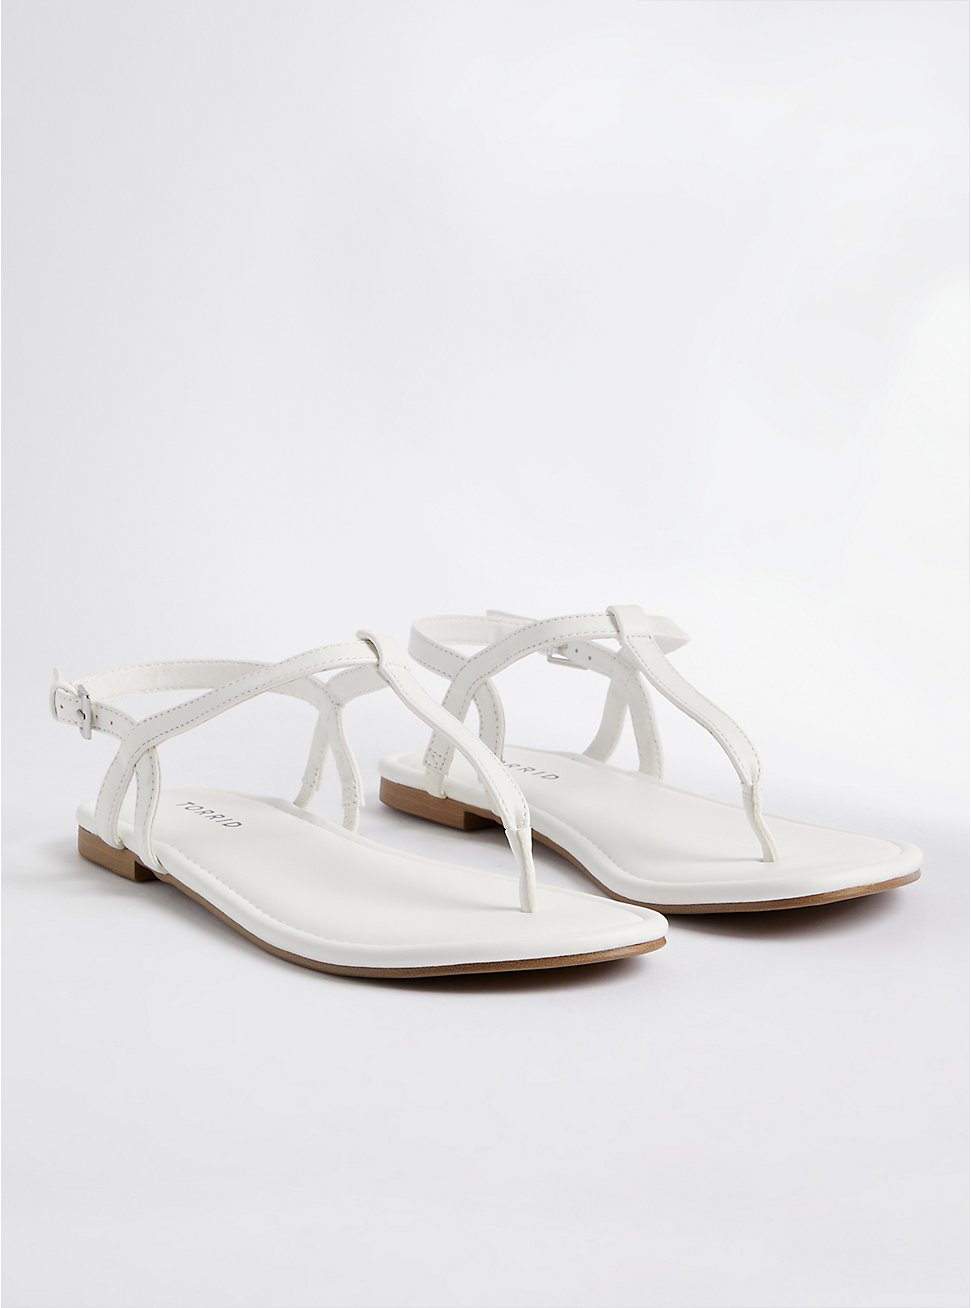 Plus Size T-Strap Sandal - Faux Leather White (WW), WHITE, hi-res